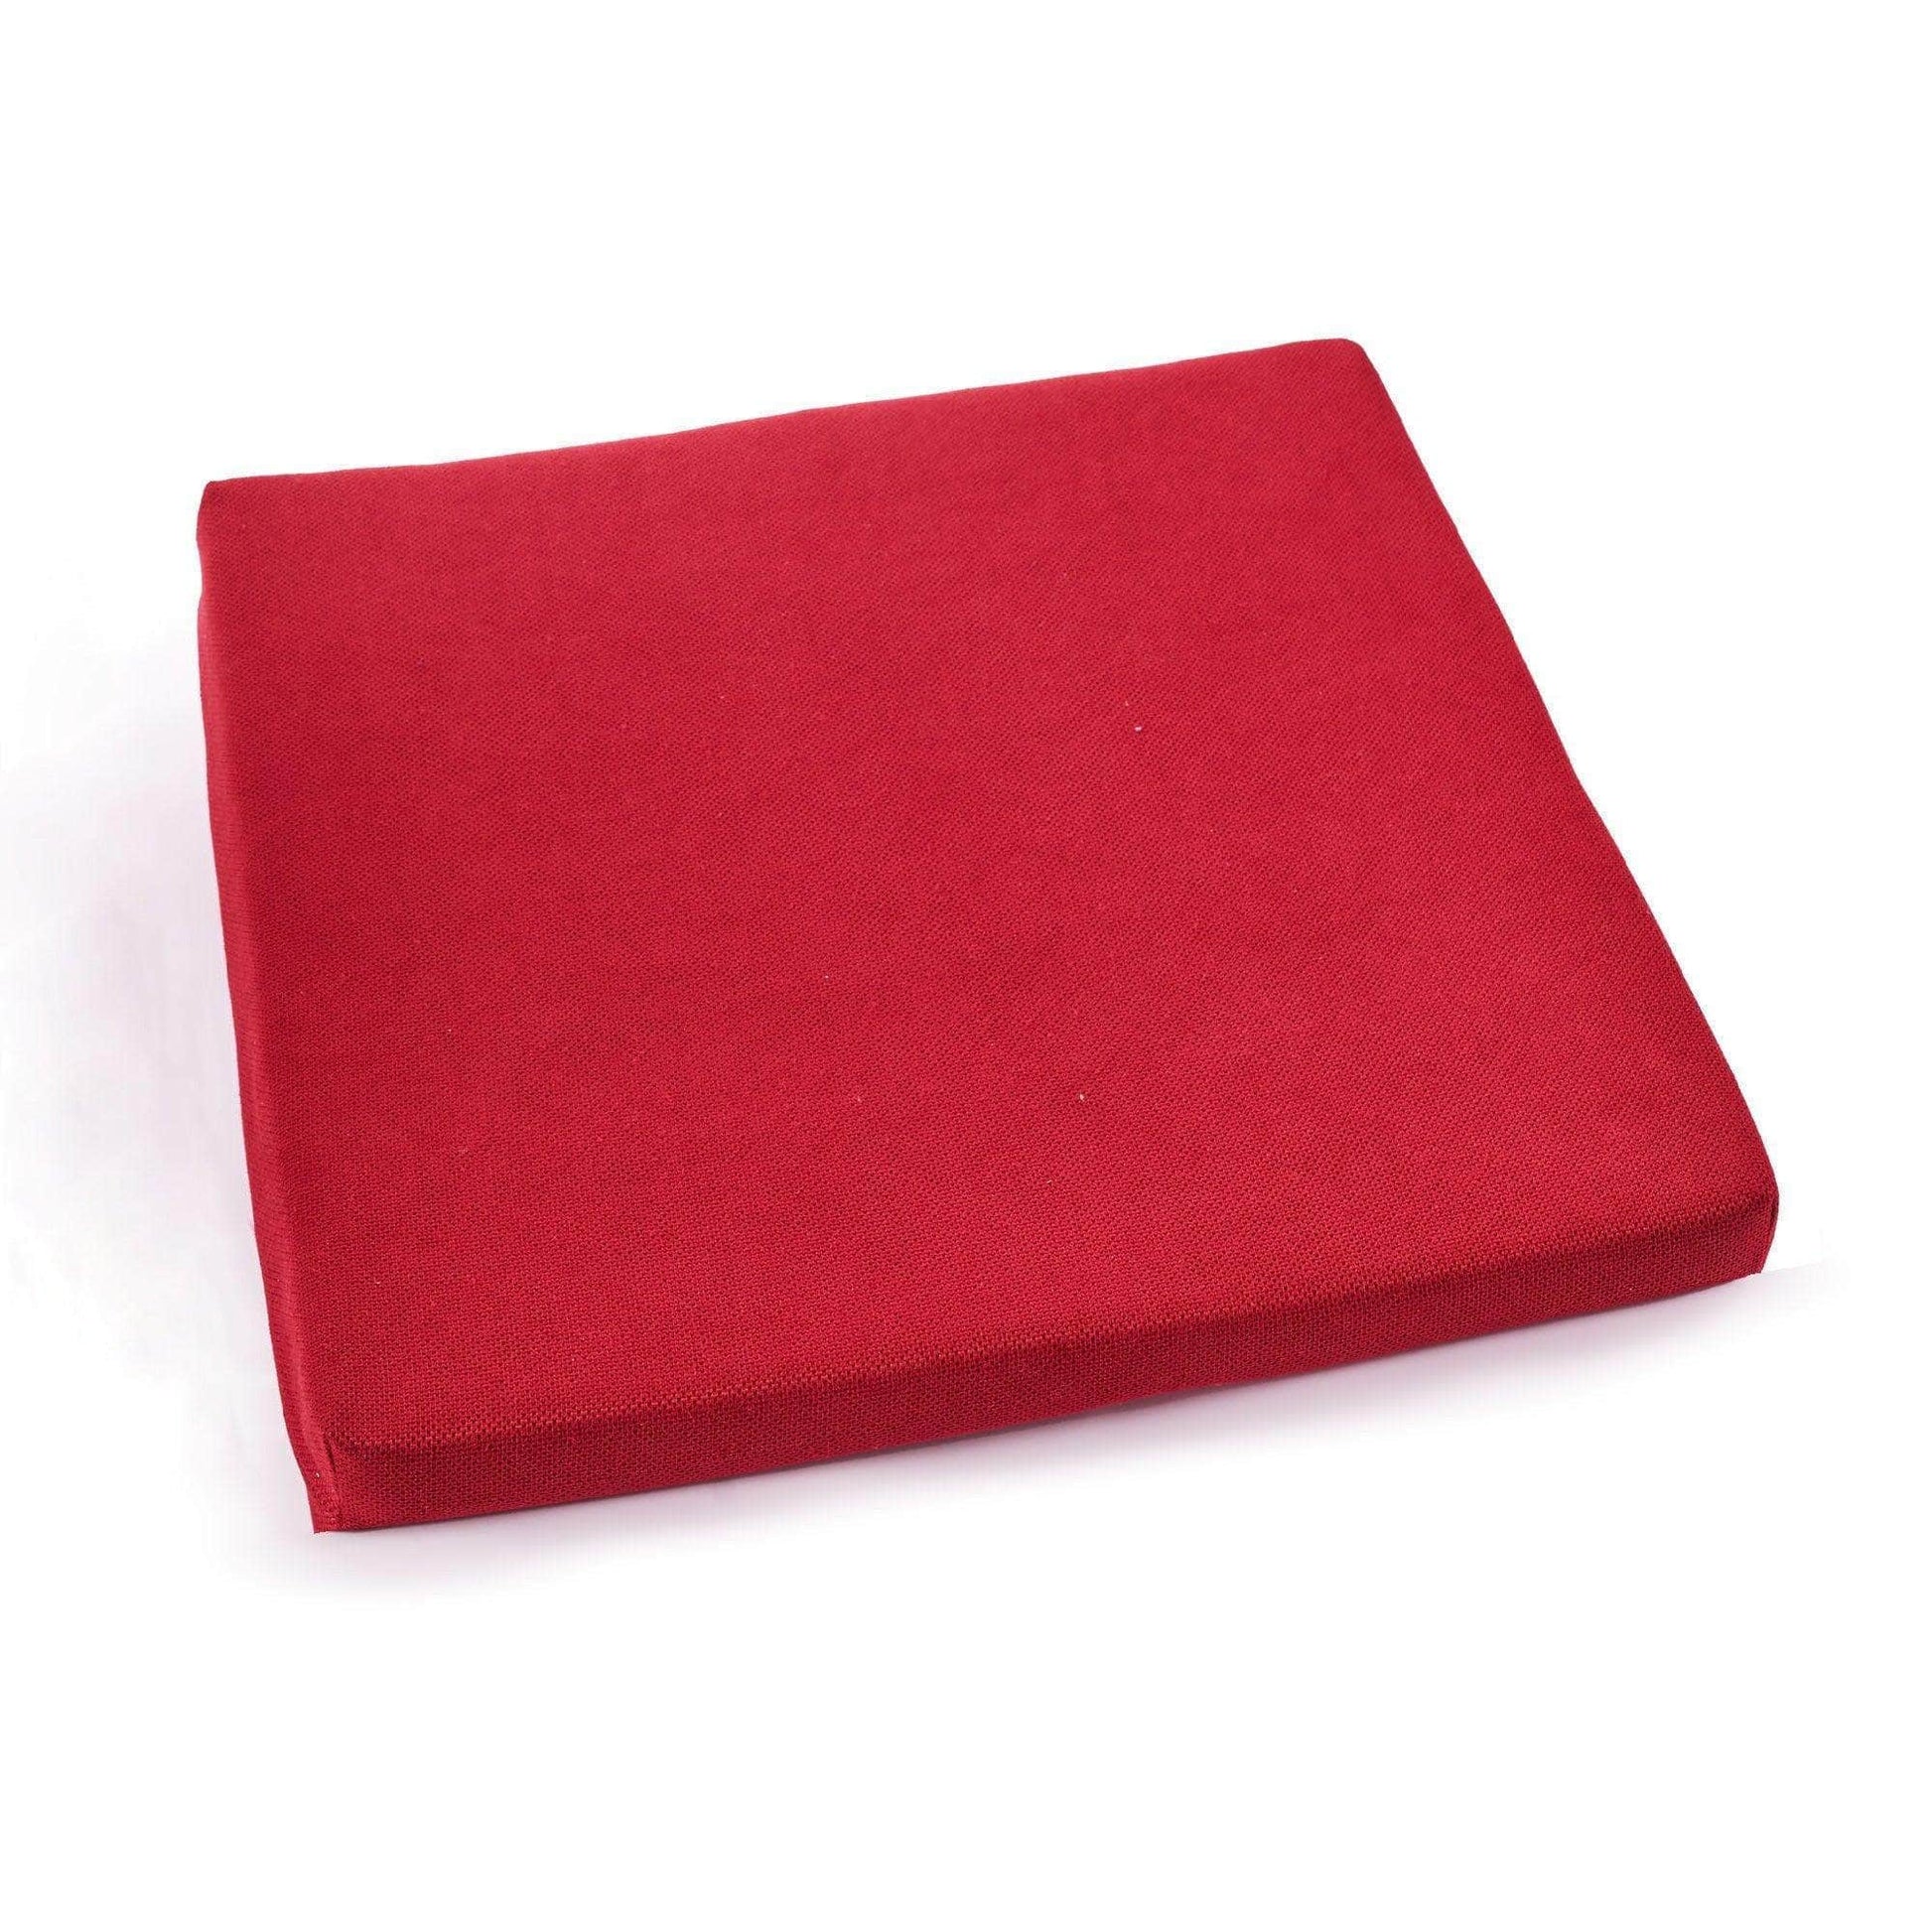 Penguin Group Cushions Darkred Square Sponge Cushion 50×52×4 cm